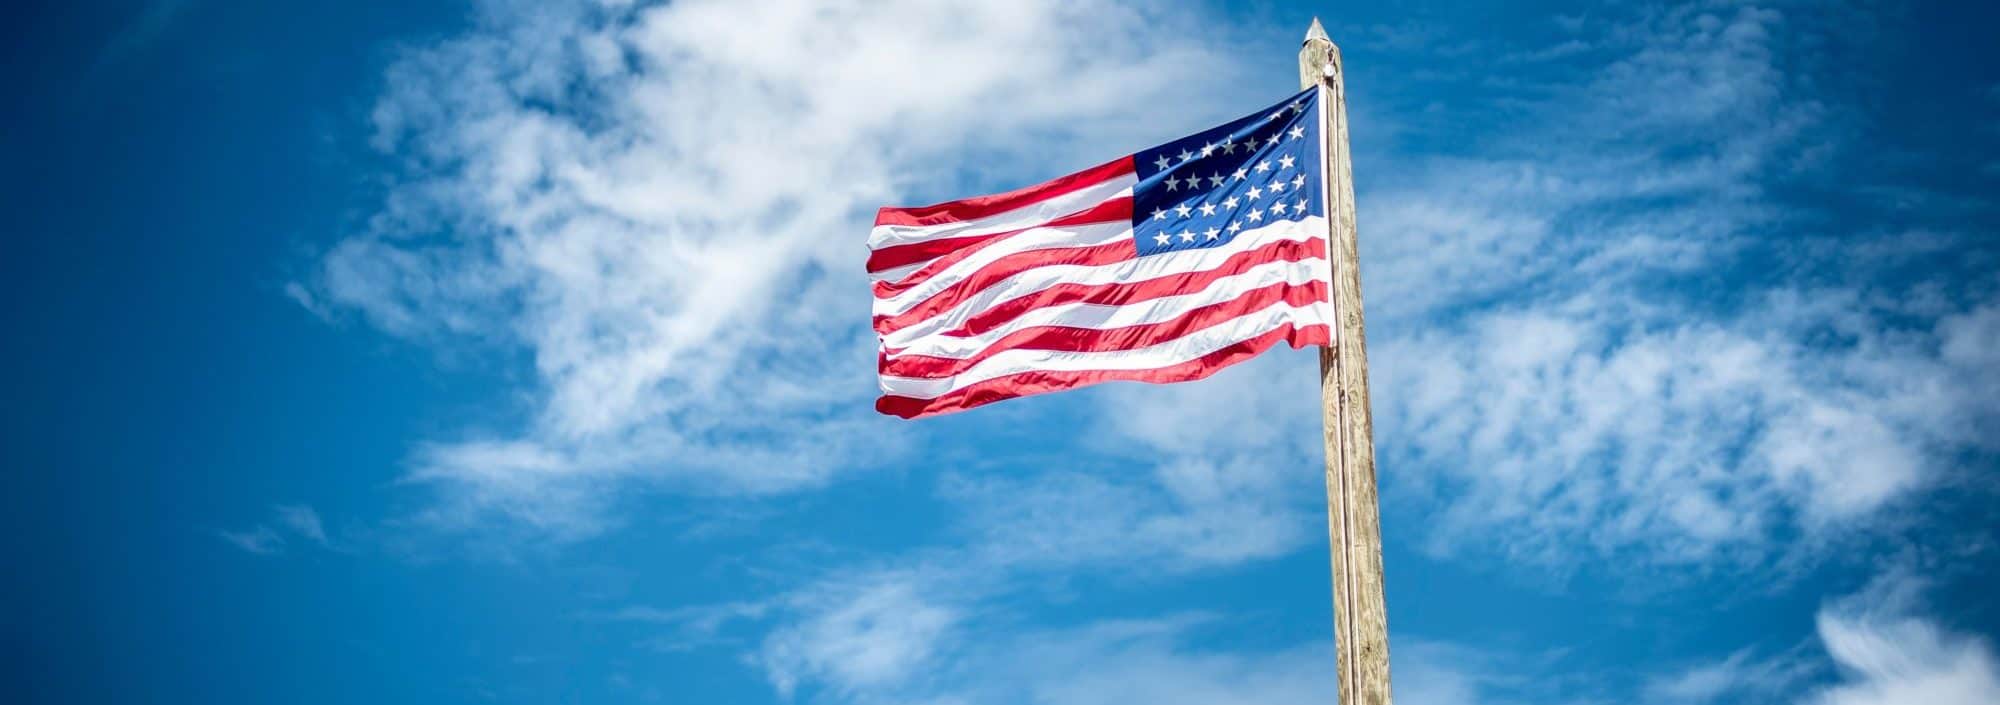 american flag against blue sky on memorial day